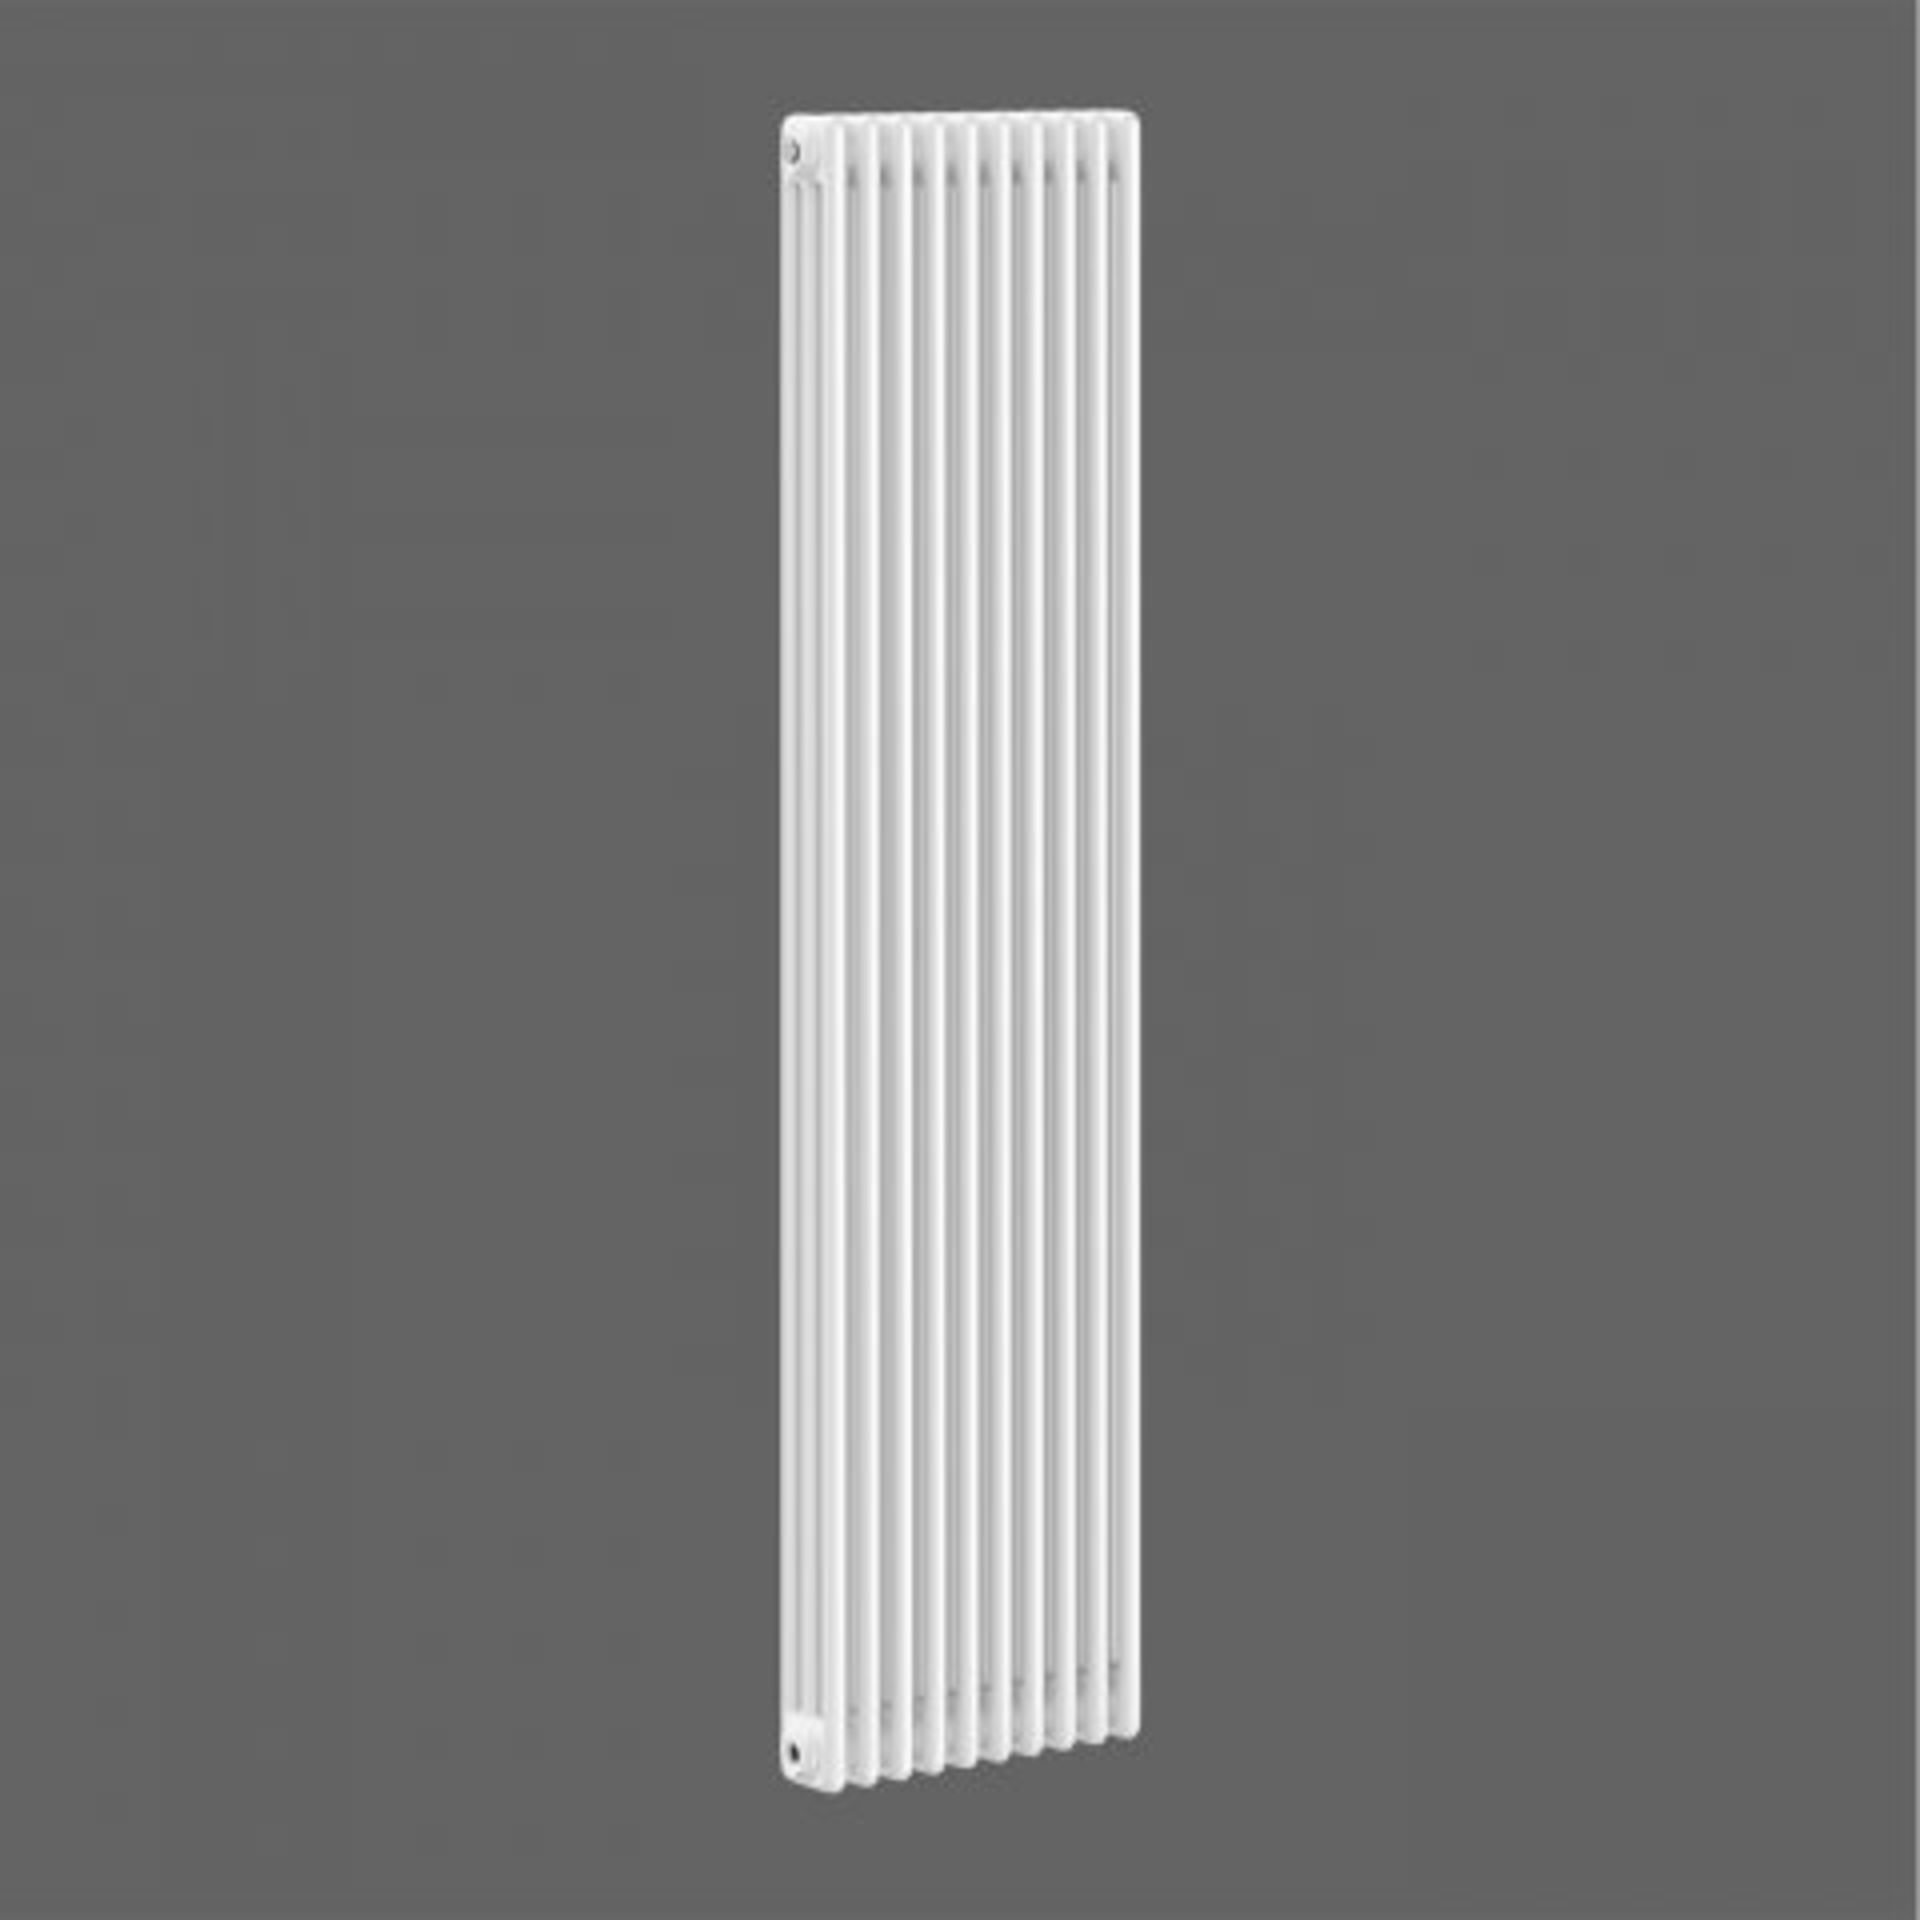 (AA4) 1800x465mm White Triple Panel Vertical Colosseum Radiator - Roma Premium. RRP £599.99. Classic - Image 2 of 3